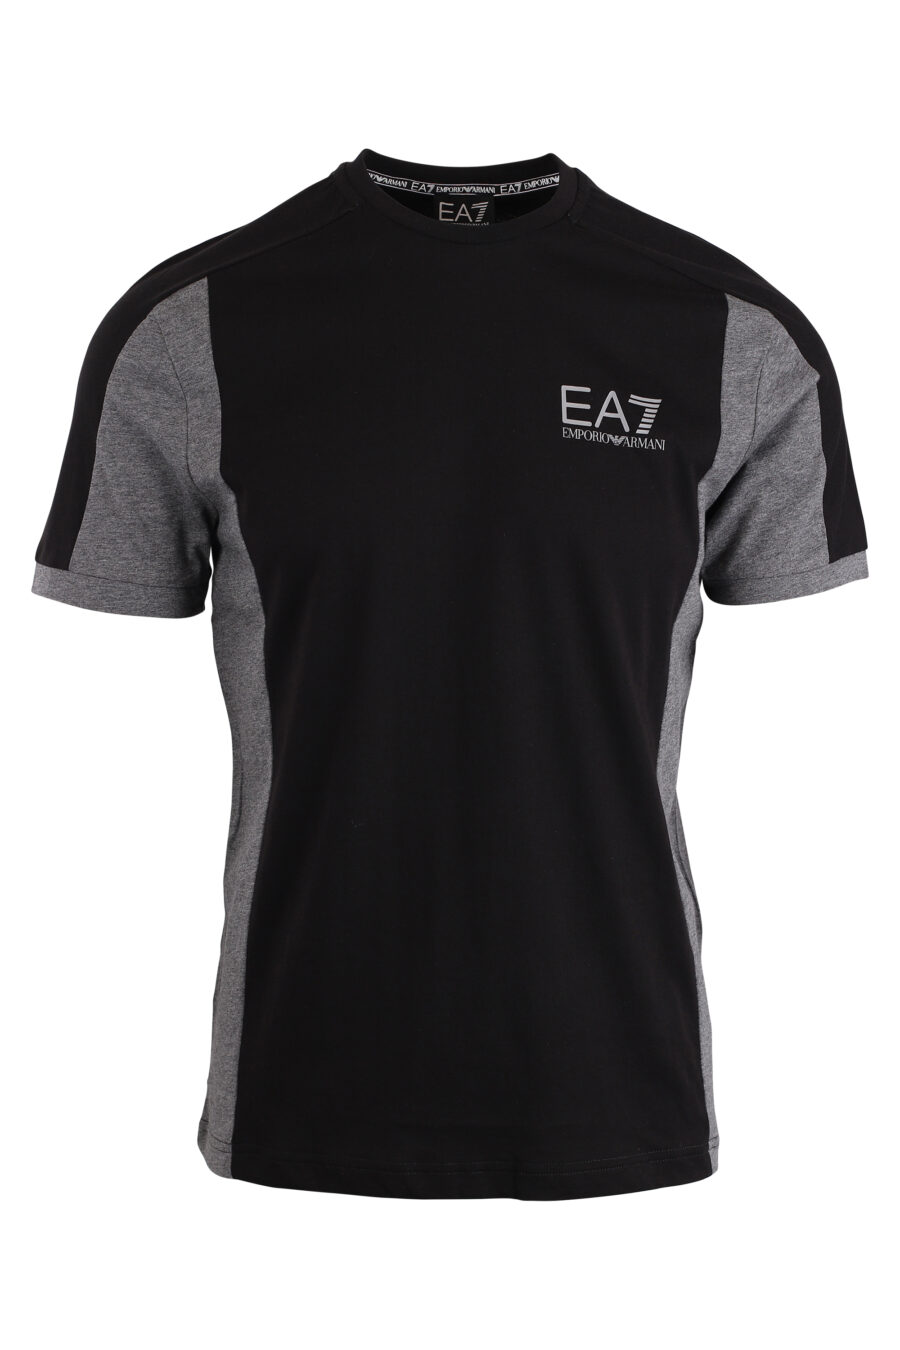 Camiseta negra con gris con logo "lux identity" gris - IMG 4228